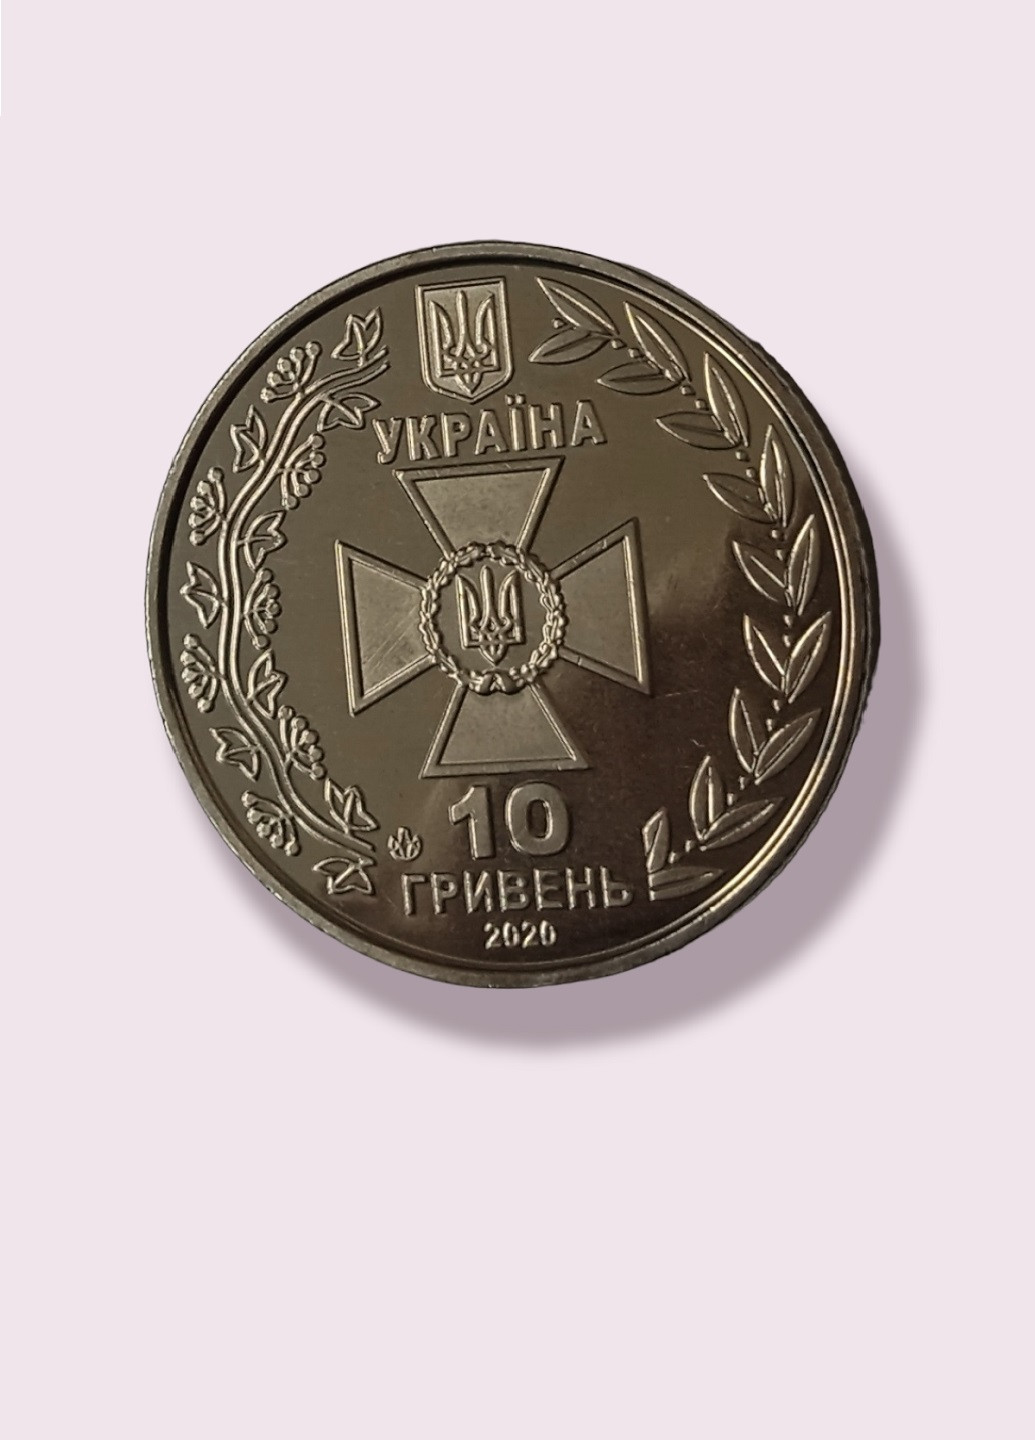 Монета Украины «Государственная пограничная служба Украины» Blue Orange (257210485)